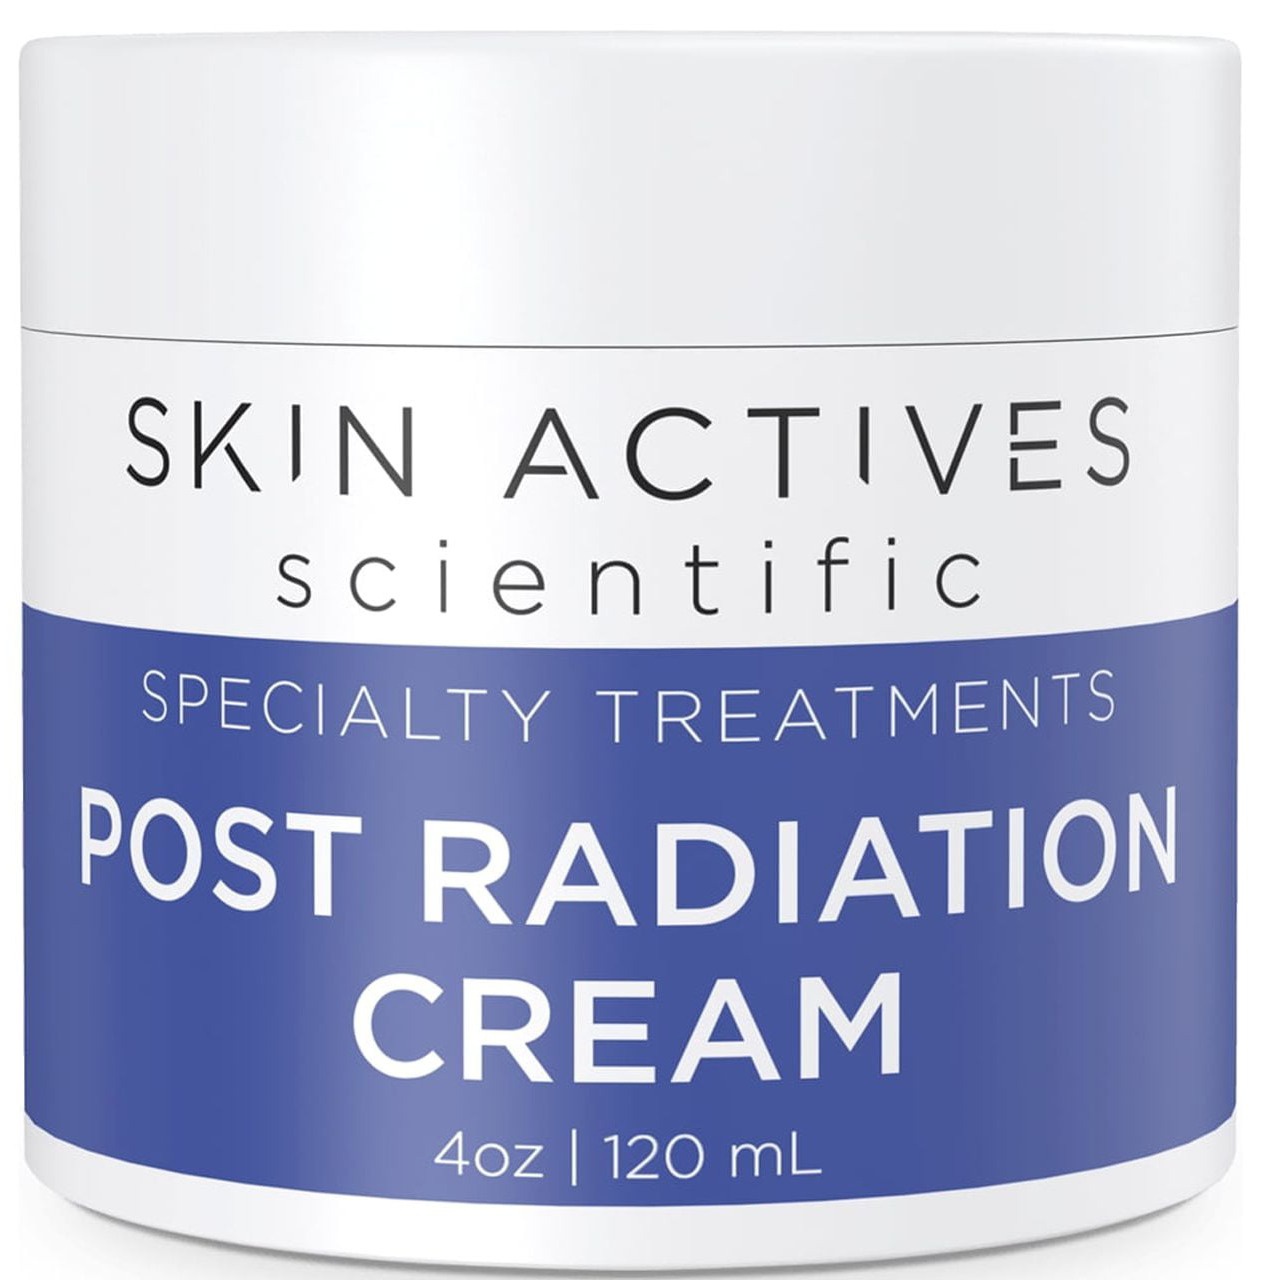 Skin Actives Scientific Post Radiation Skin Cream